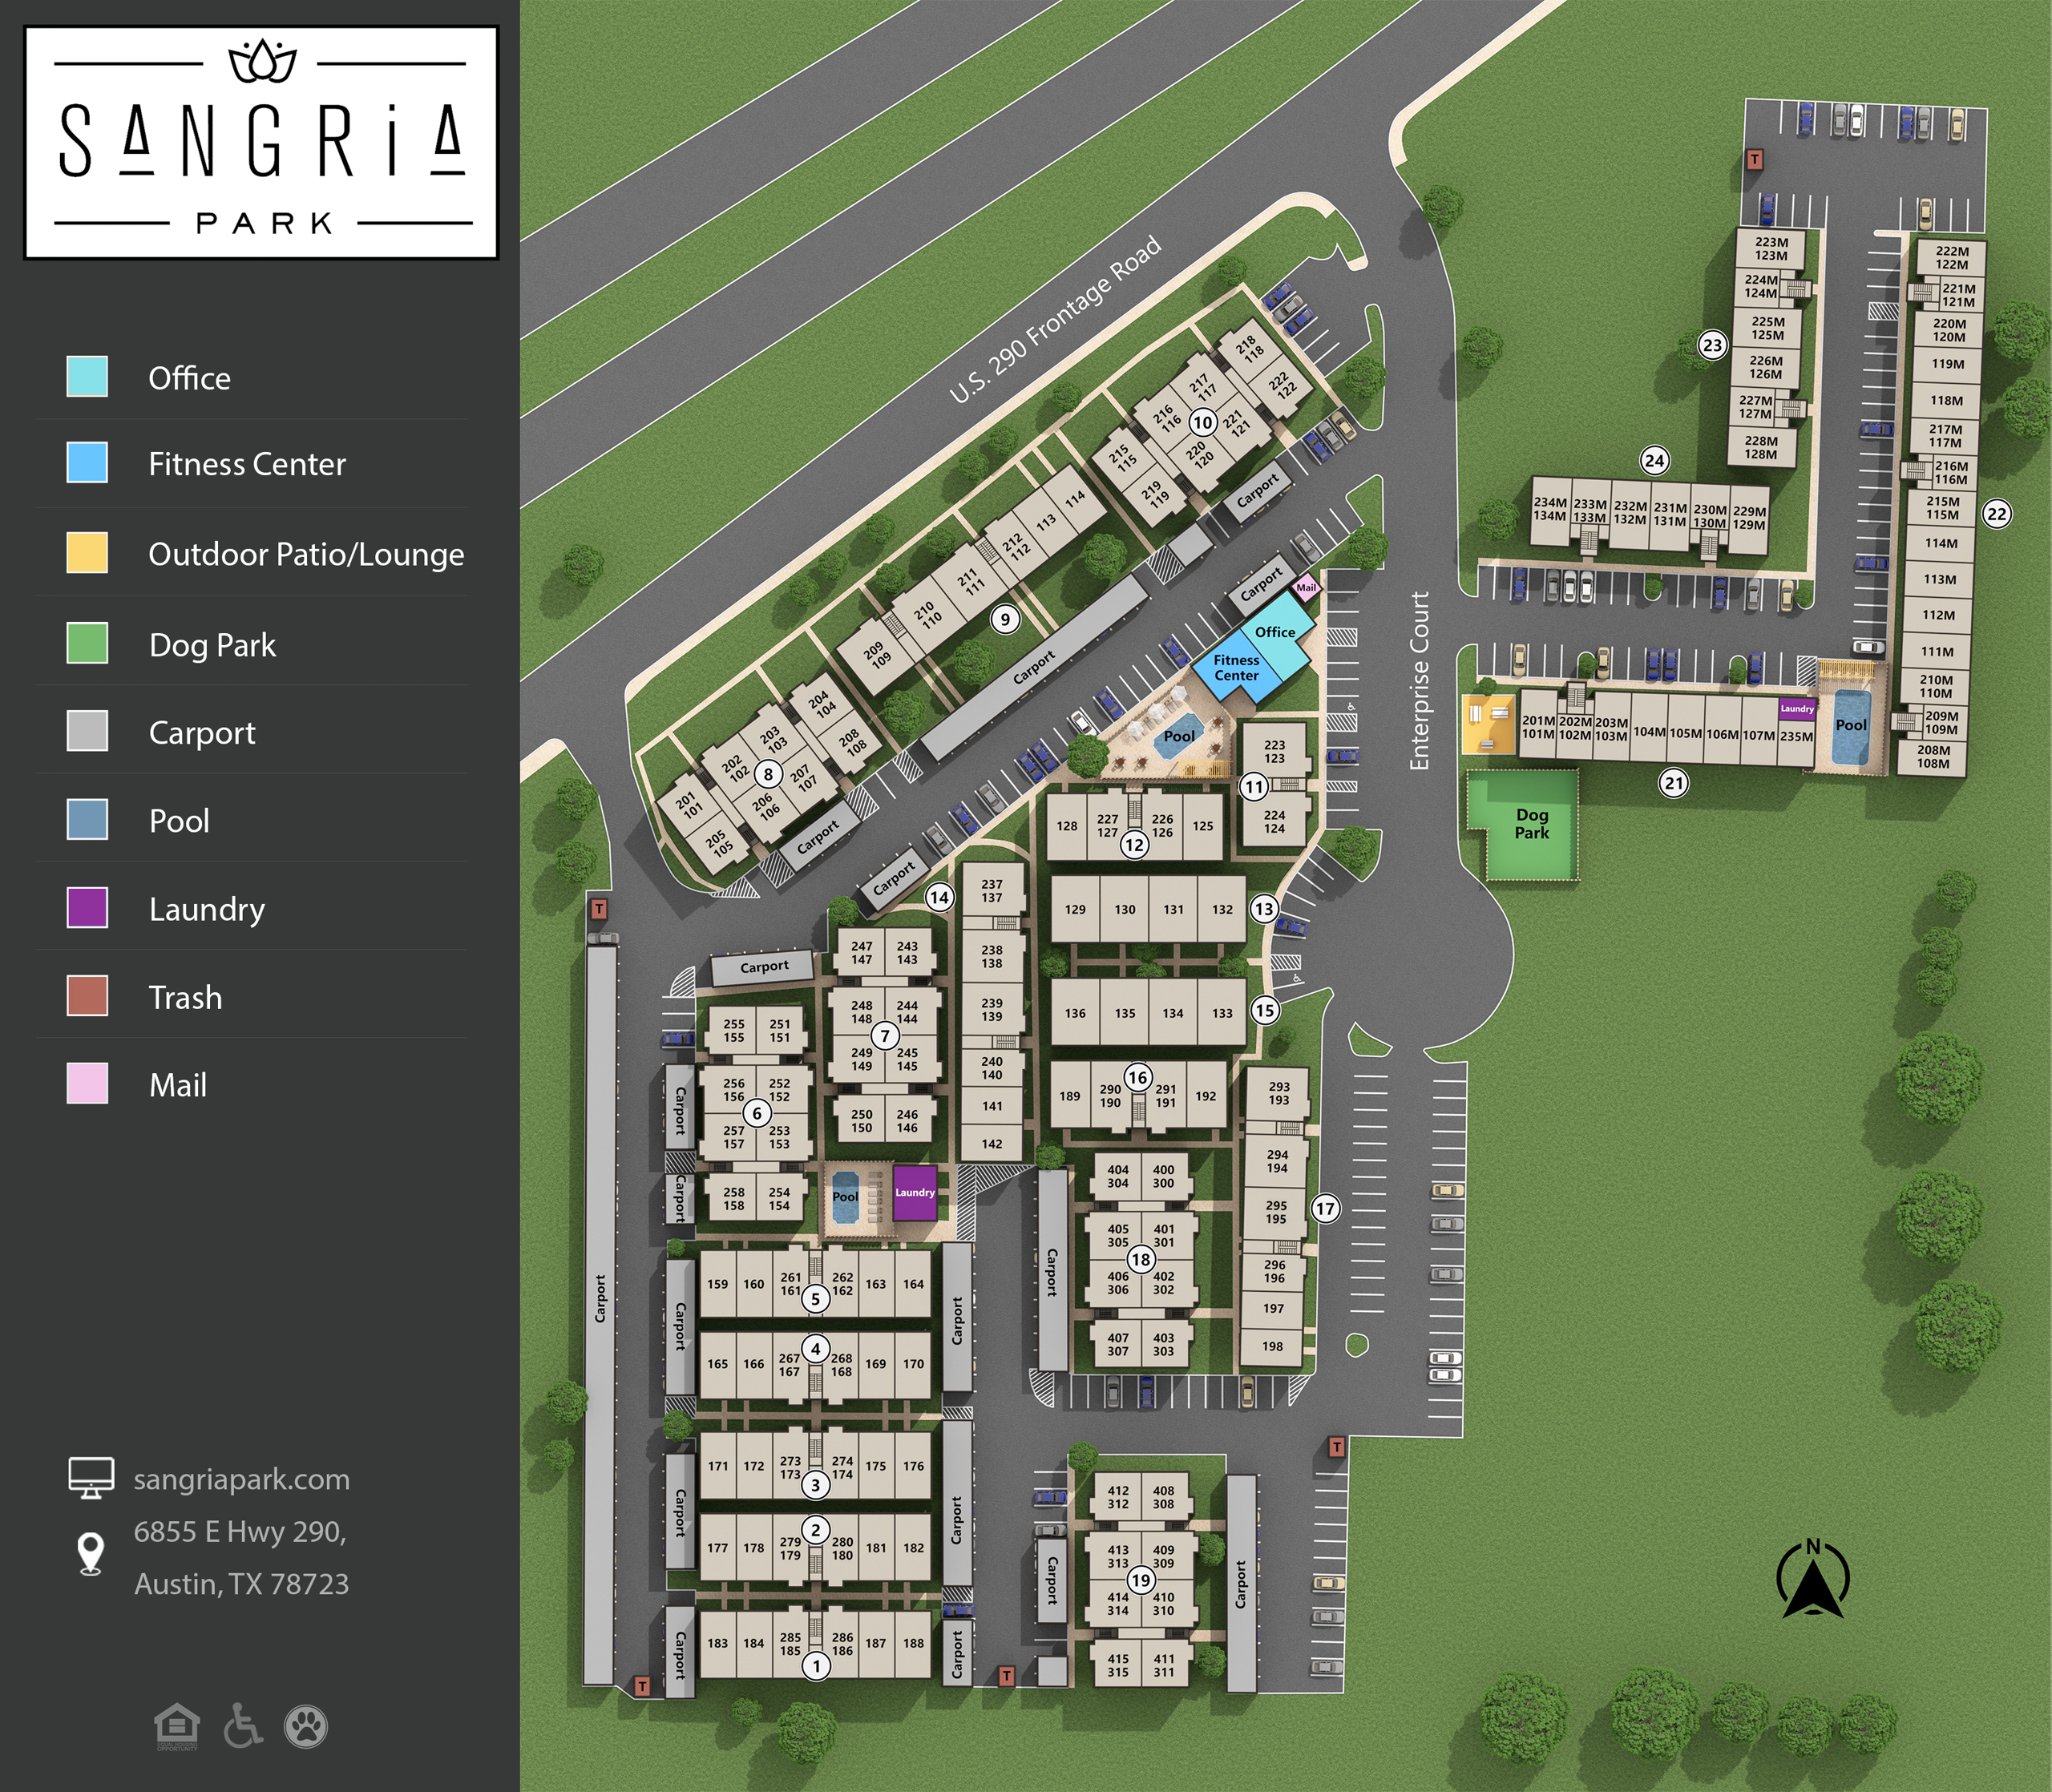 Sitemap for Sangria Park in Austin, Texas